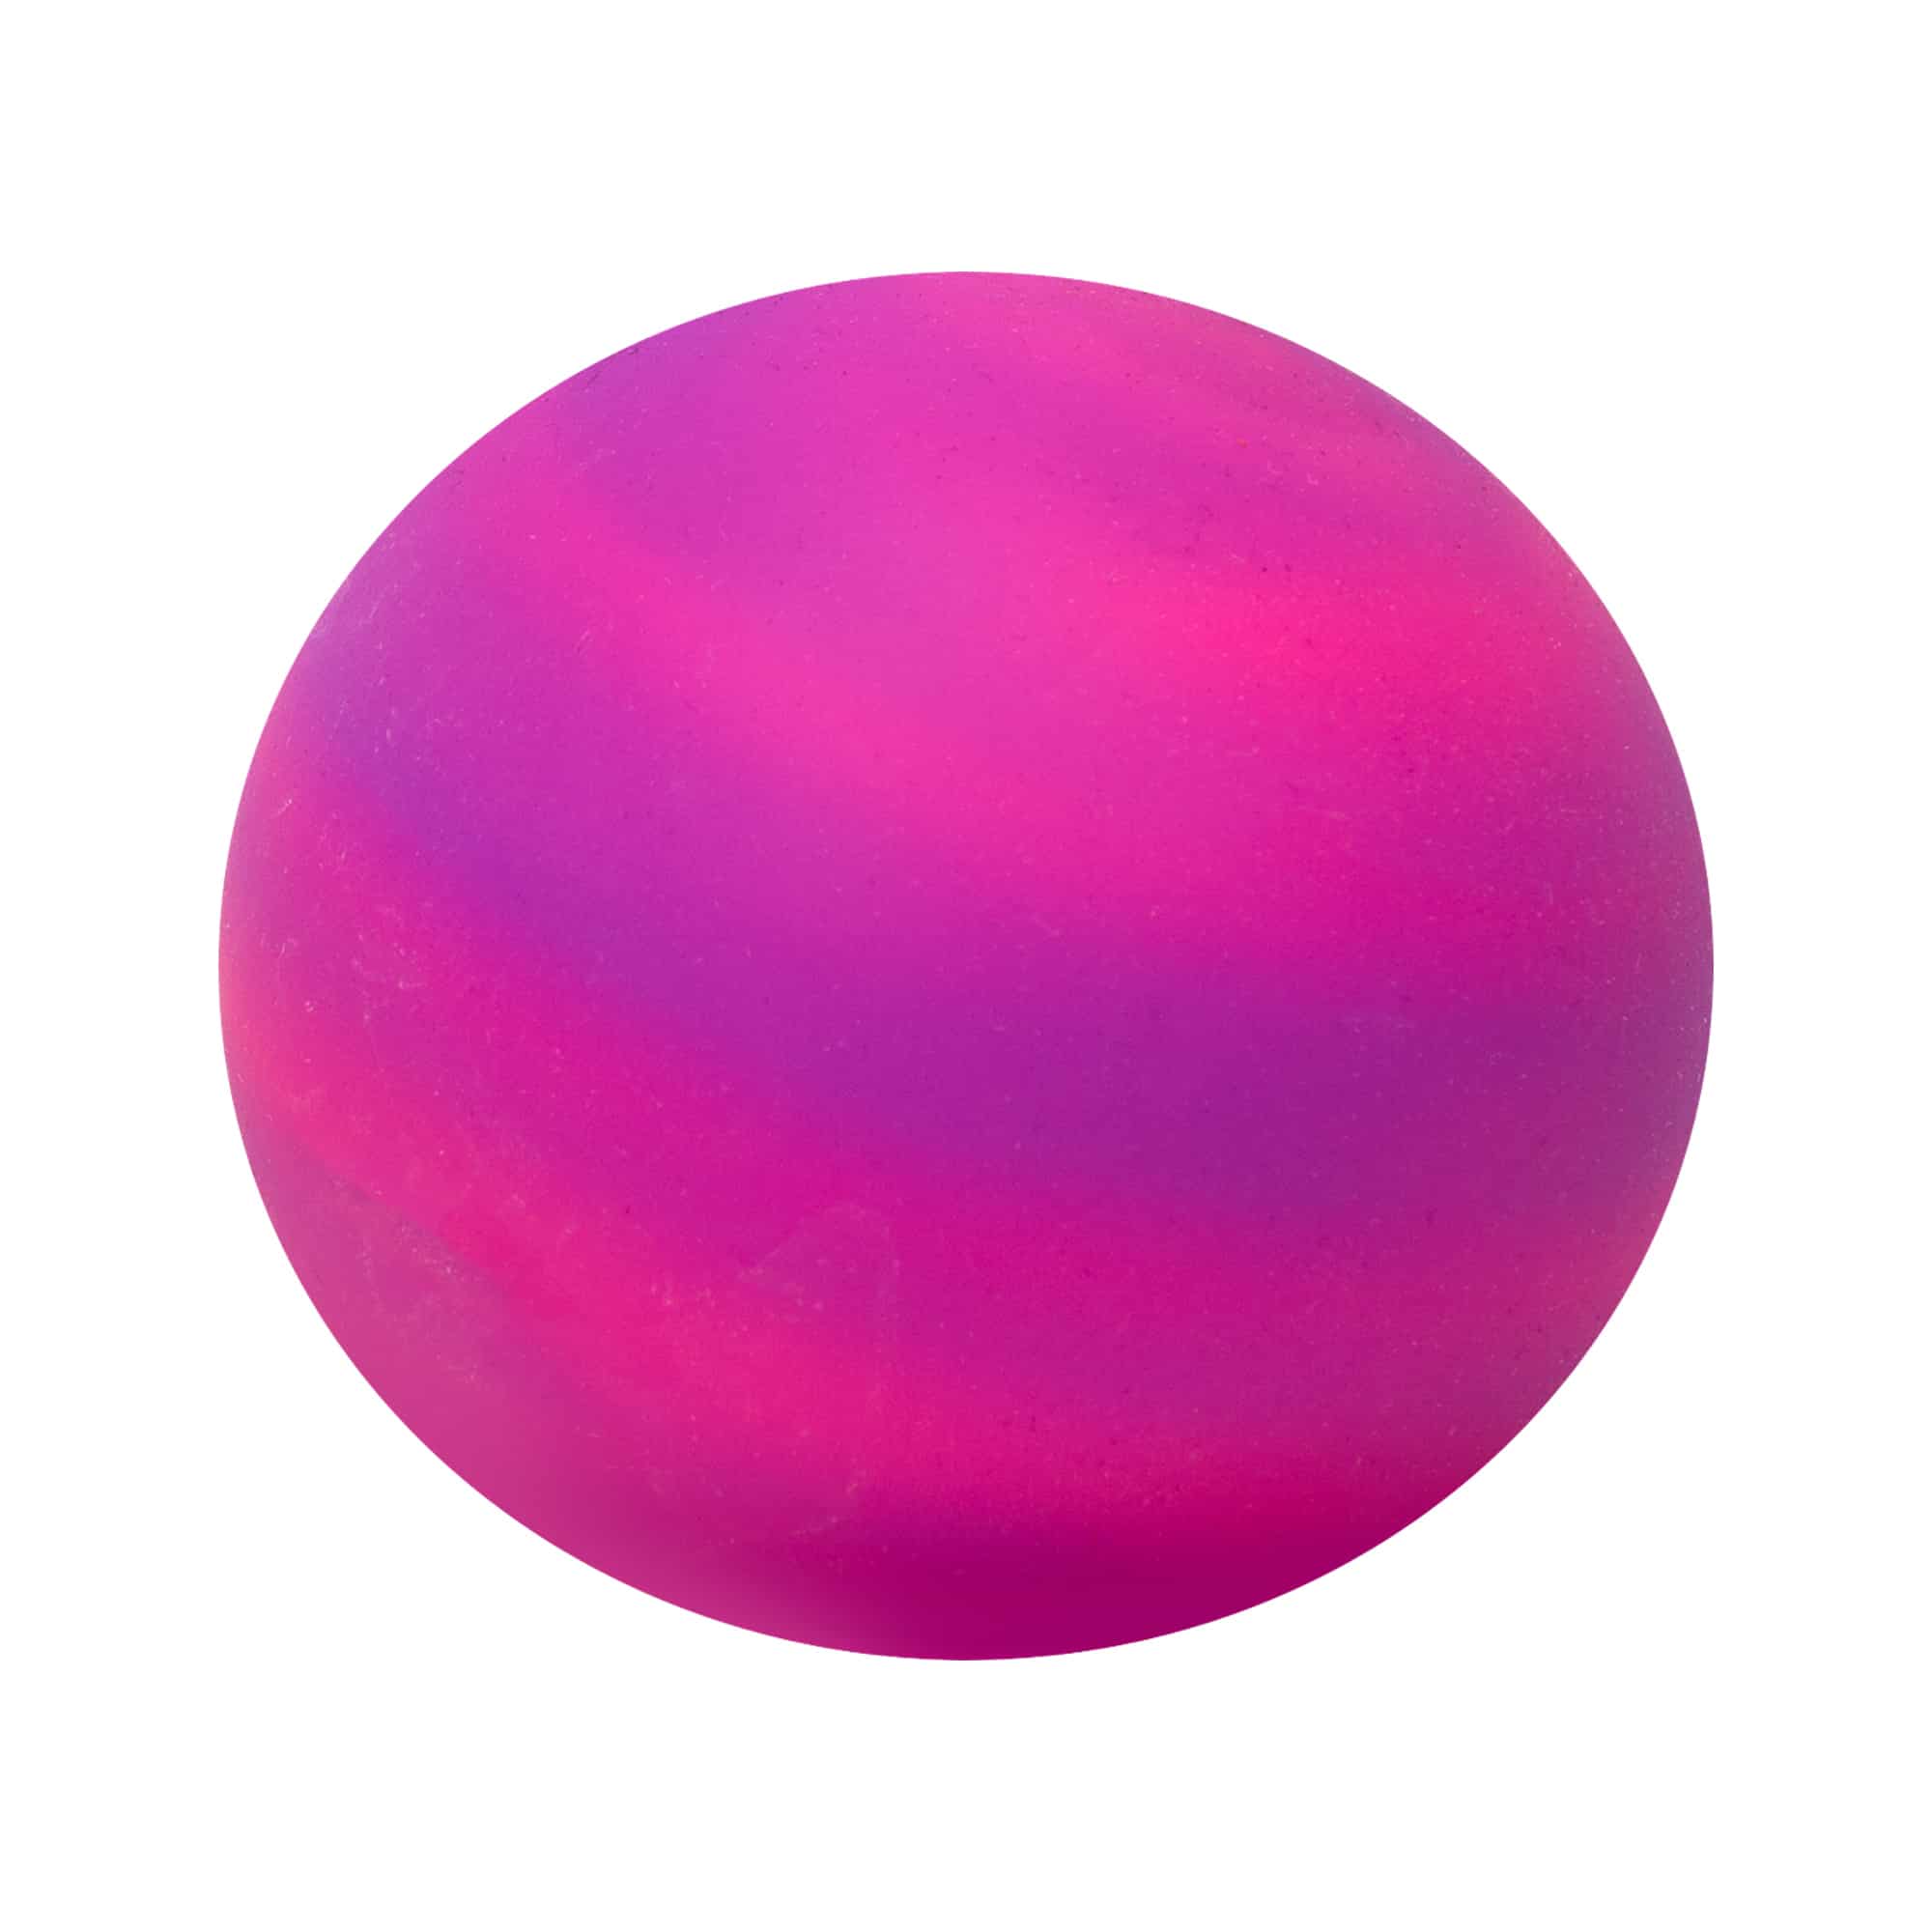 Nee Doh - Swirl (Single) - Pink, Green, or Orange    